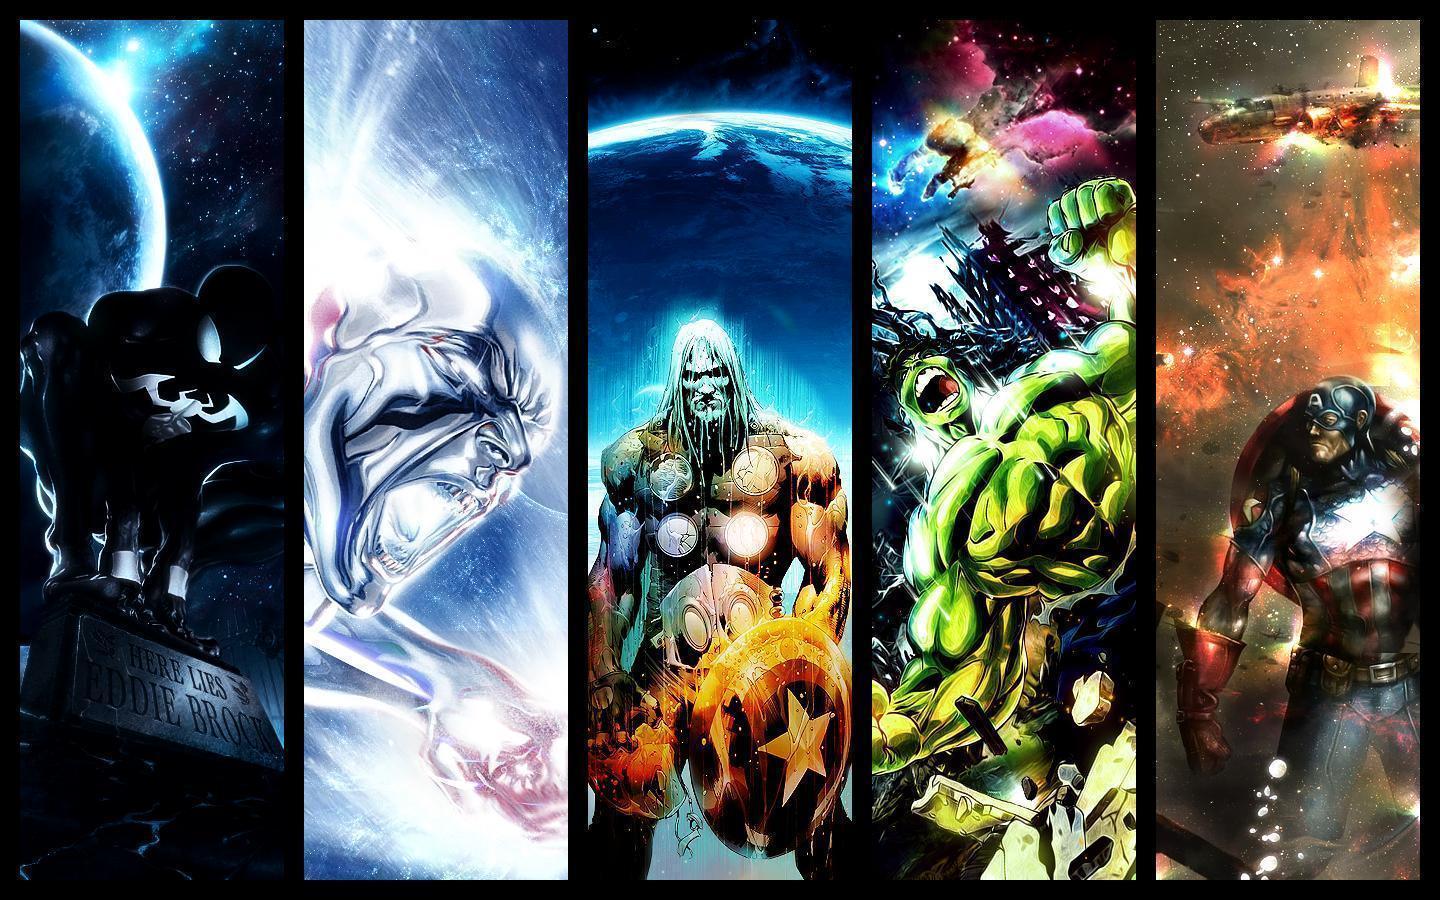 imagineanddo: Wallpaper de Superheroes de Marvel